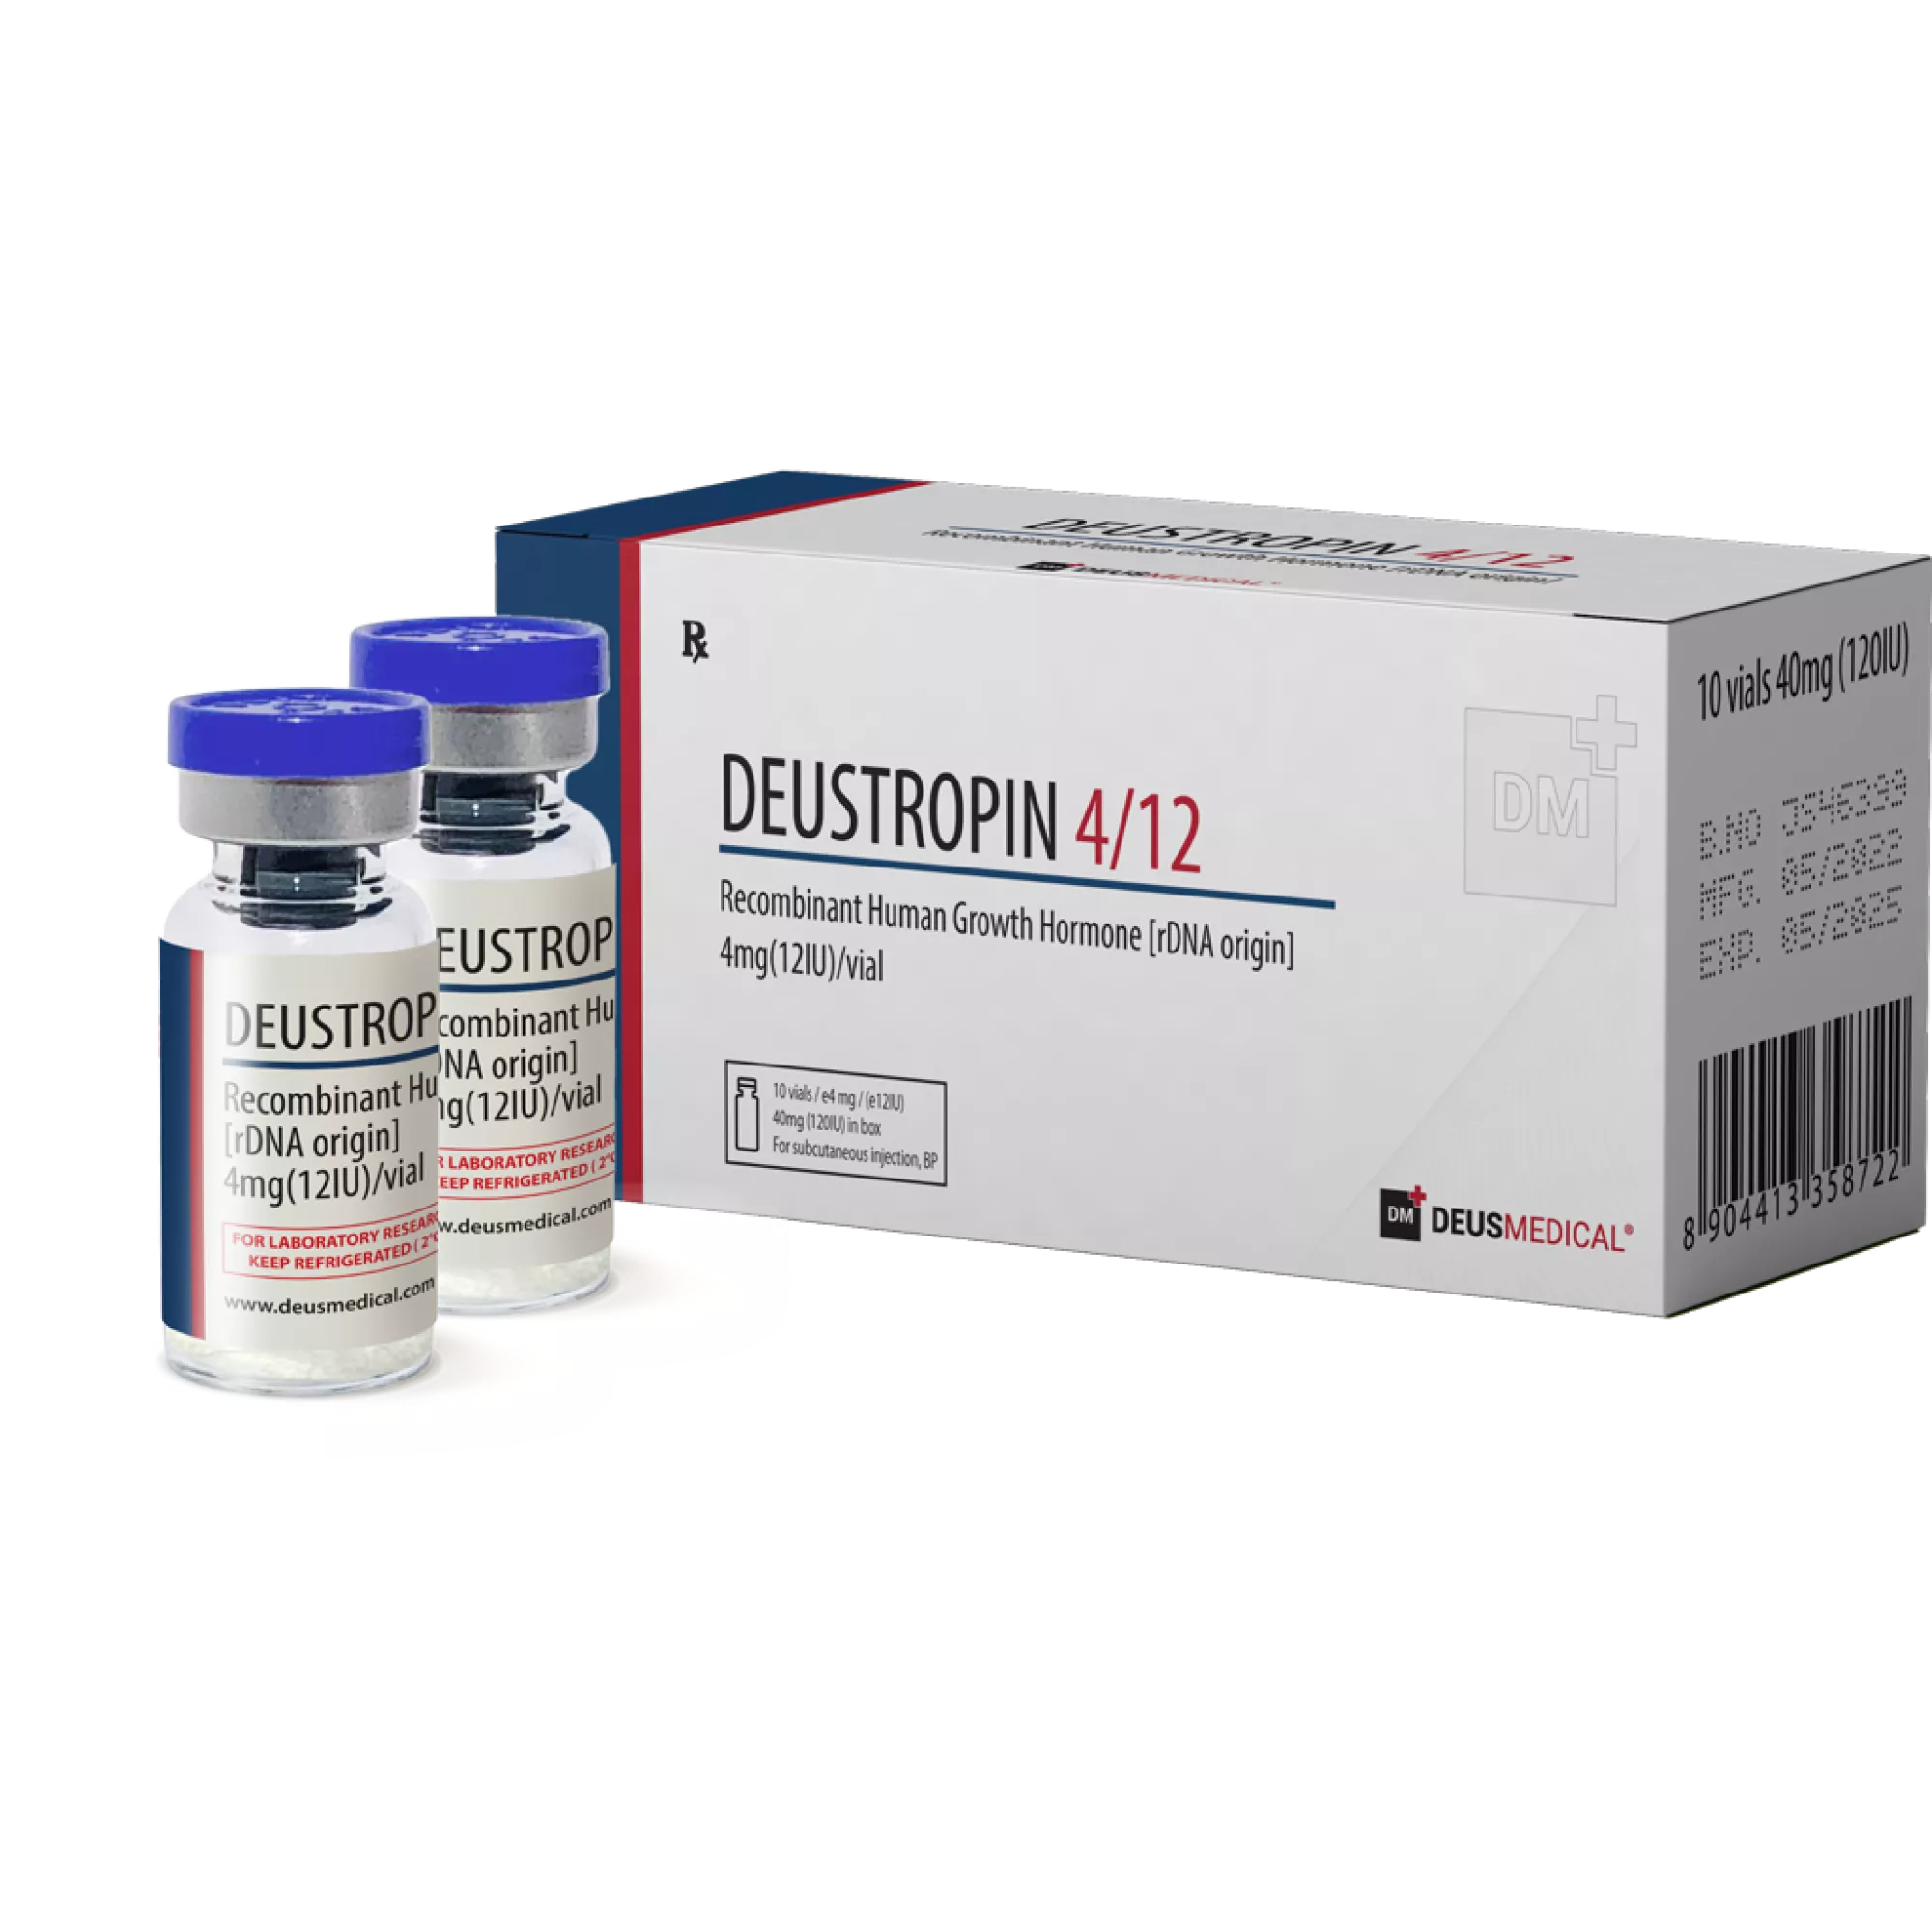 DEUSTROPIN 4/12 (Recombinant Human Growth Hormone [původ rDNA]), Deus Medical, Koupit steroidy online - www.deuspower.shop